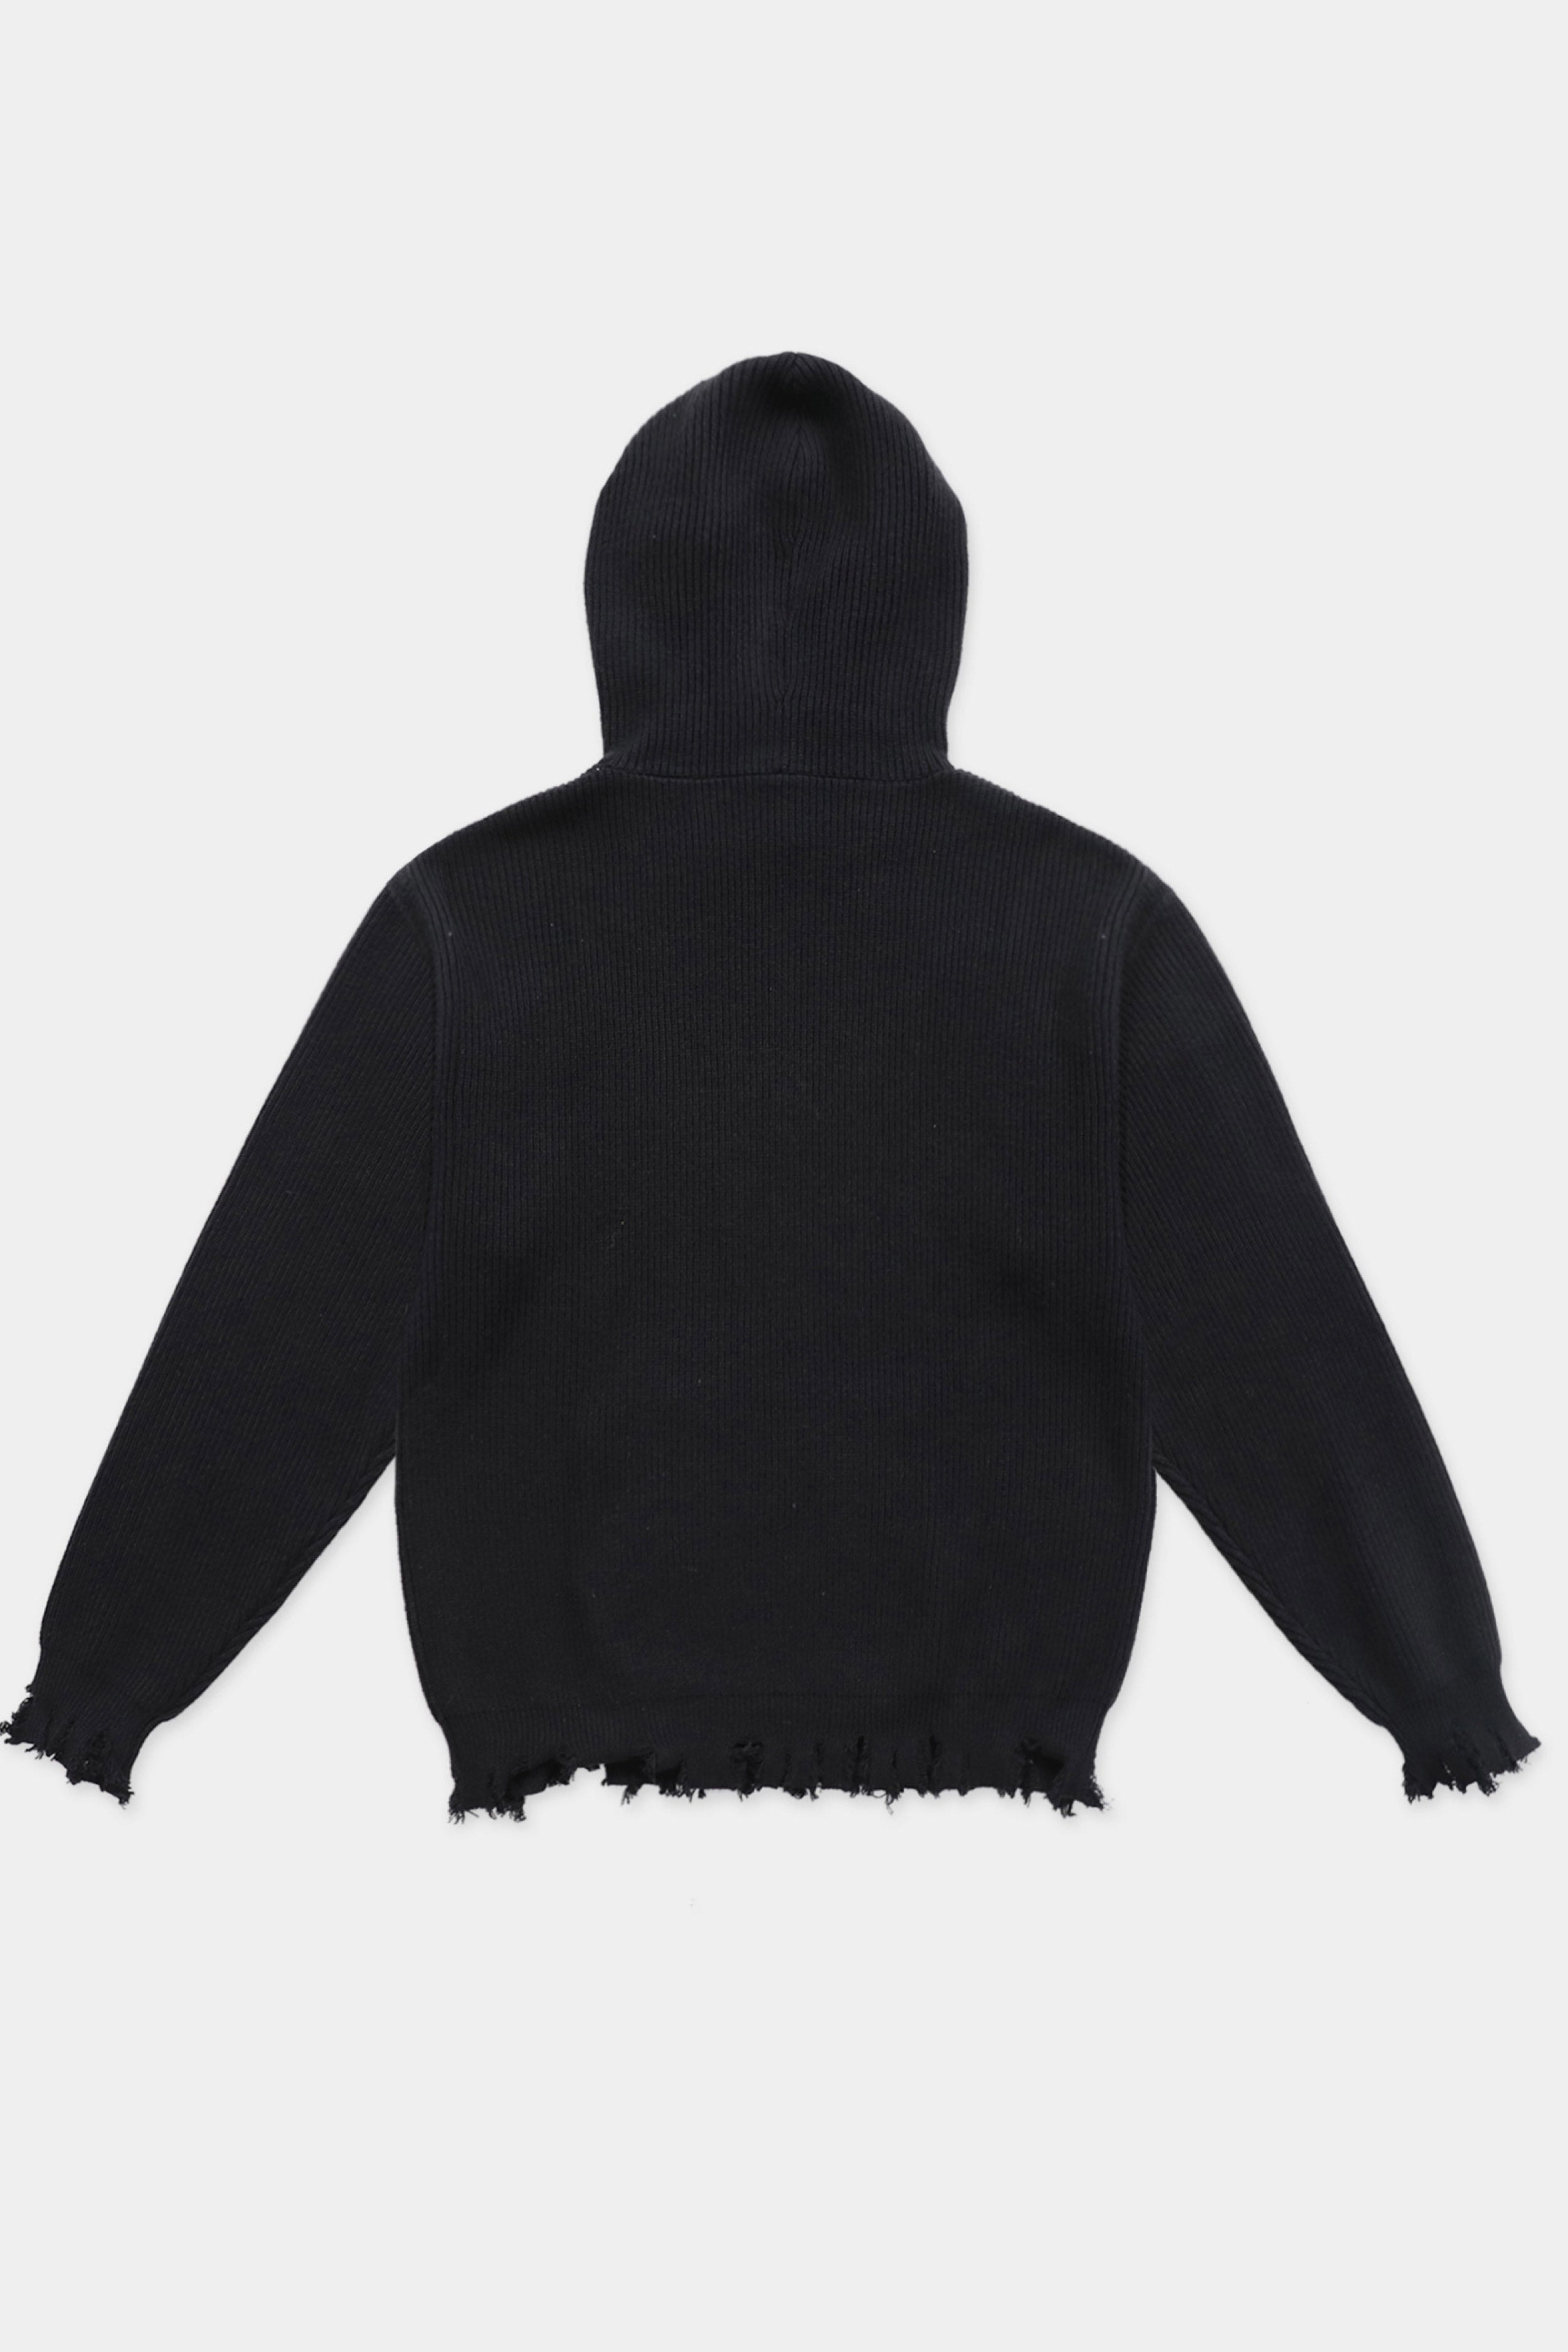 Badblood Destroyed Hooded Sweater Black